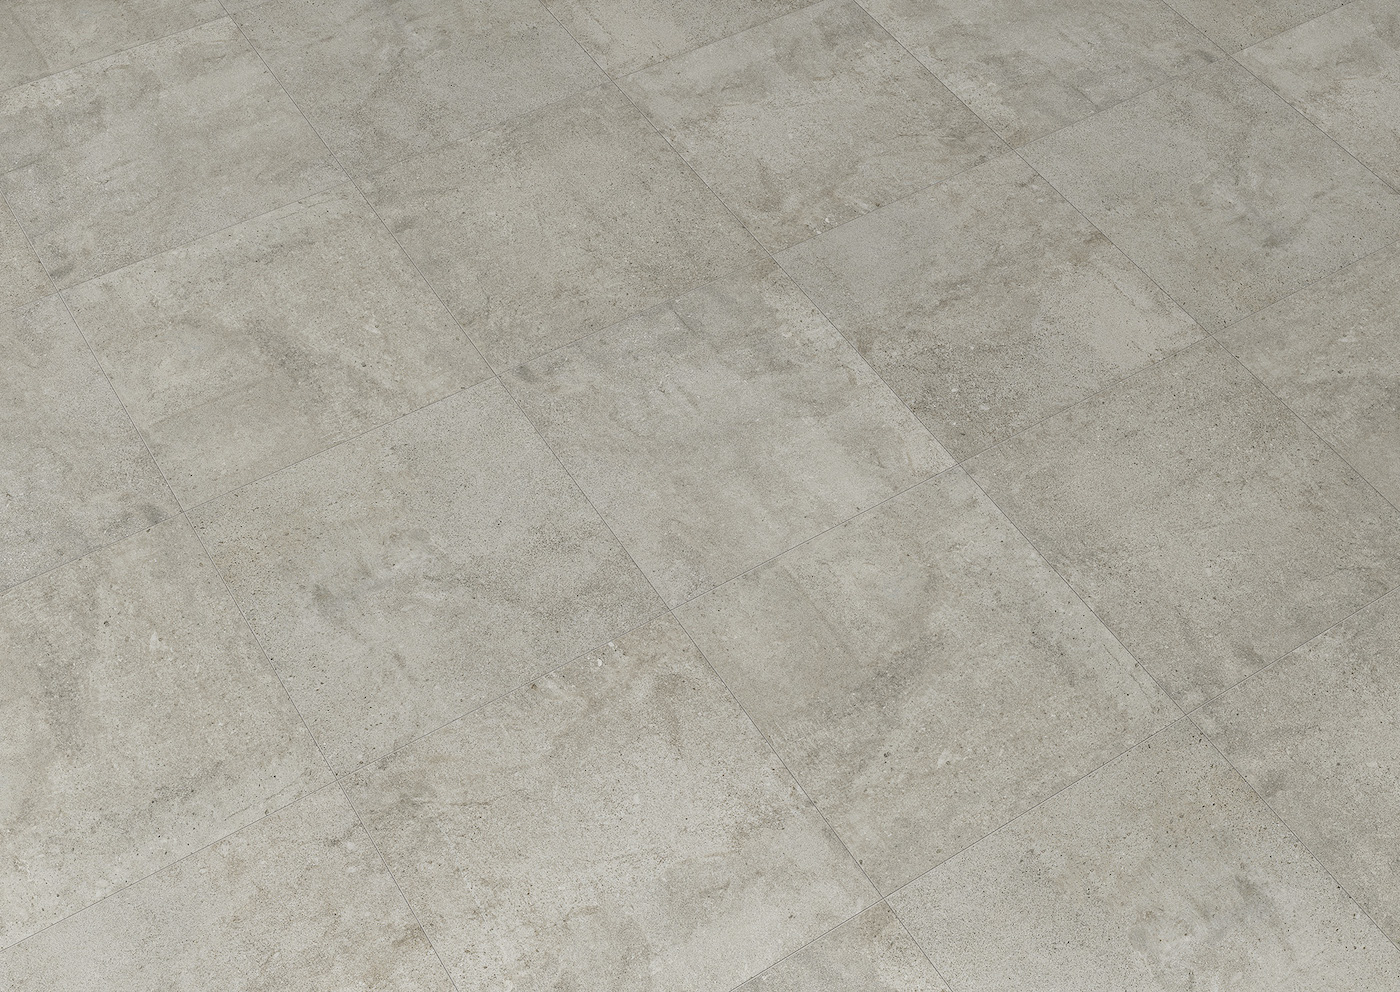 Kontext light grey 60x60 flooring